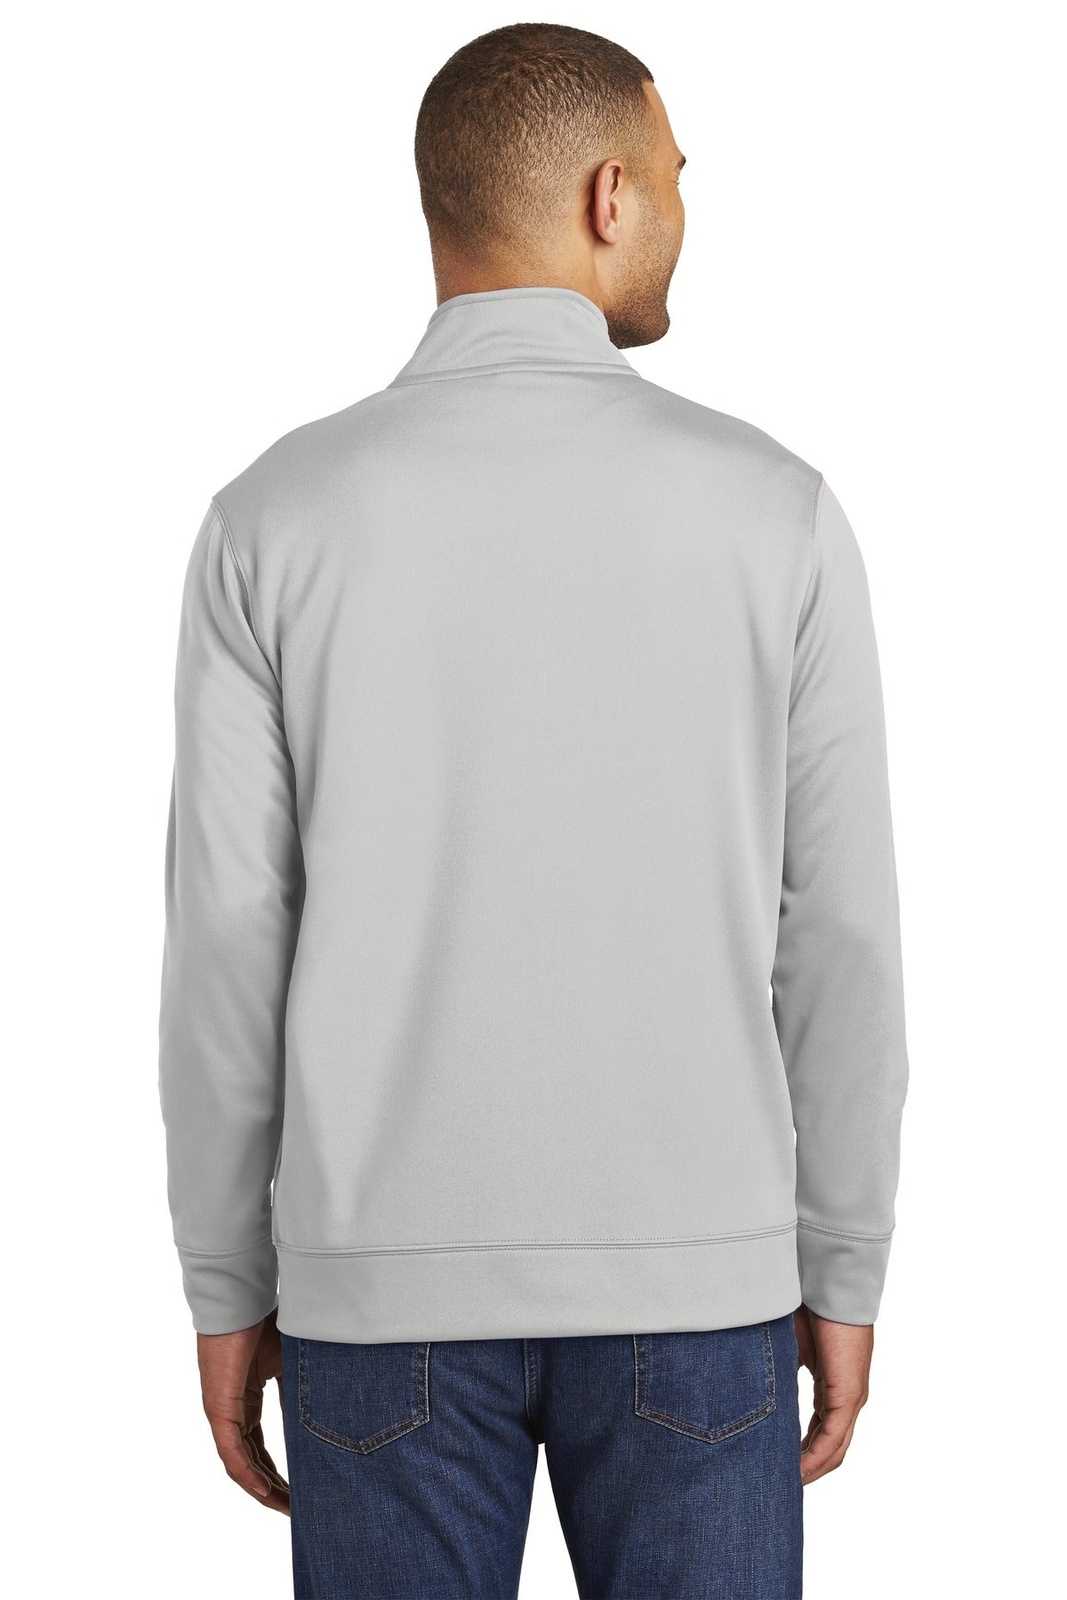 Port & Company PC590Q Fleece 1/4-Zip Pullover Sweatshirt - Silver - HIT a Double - 1